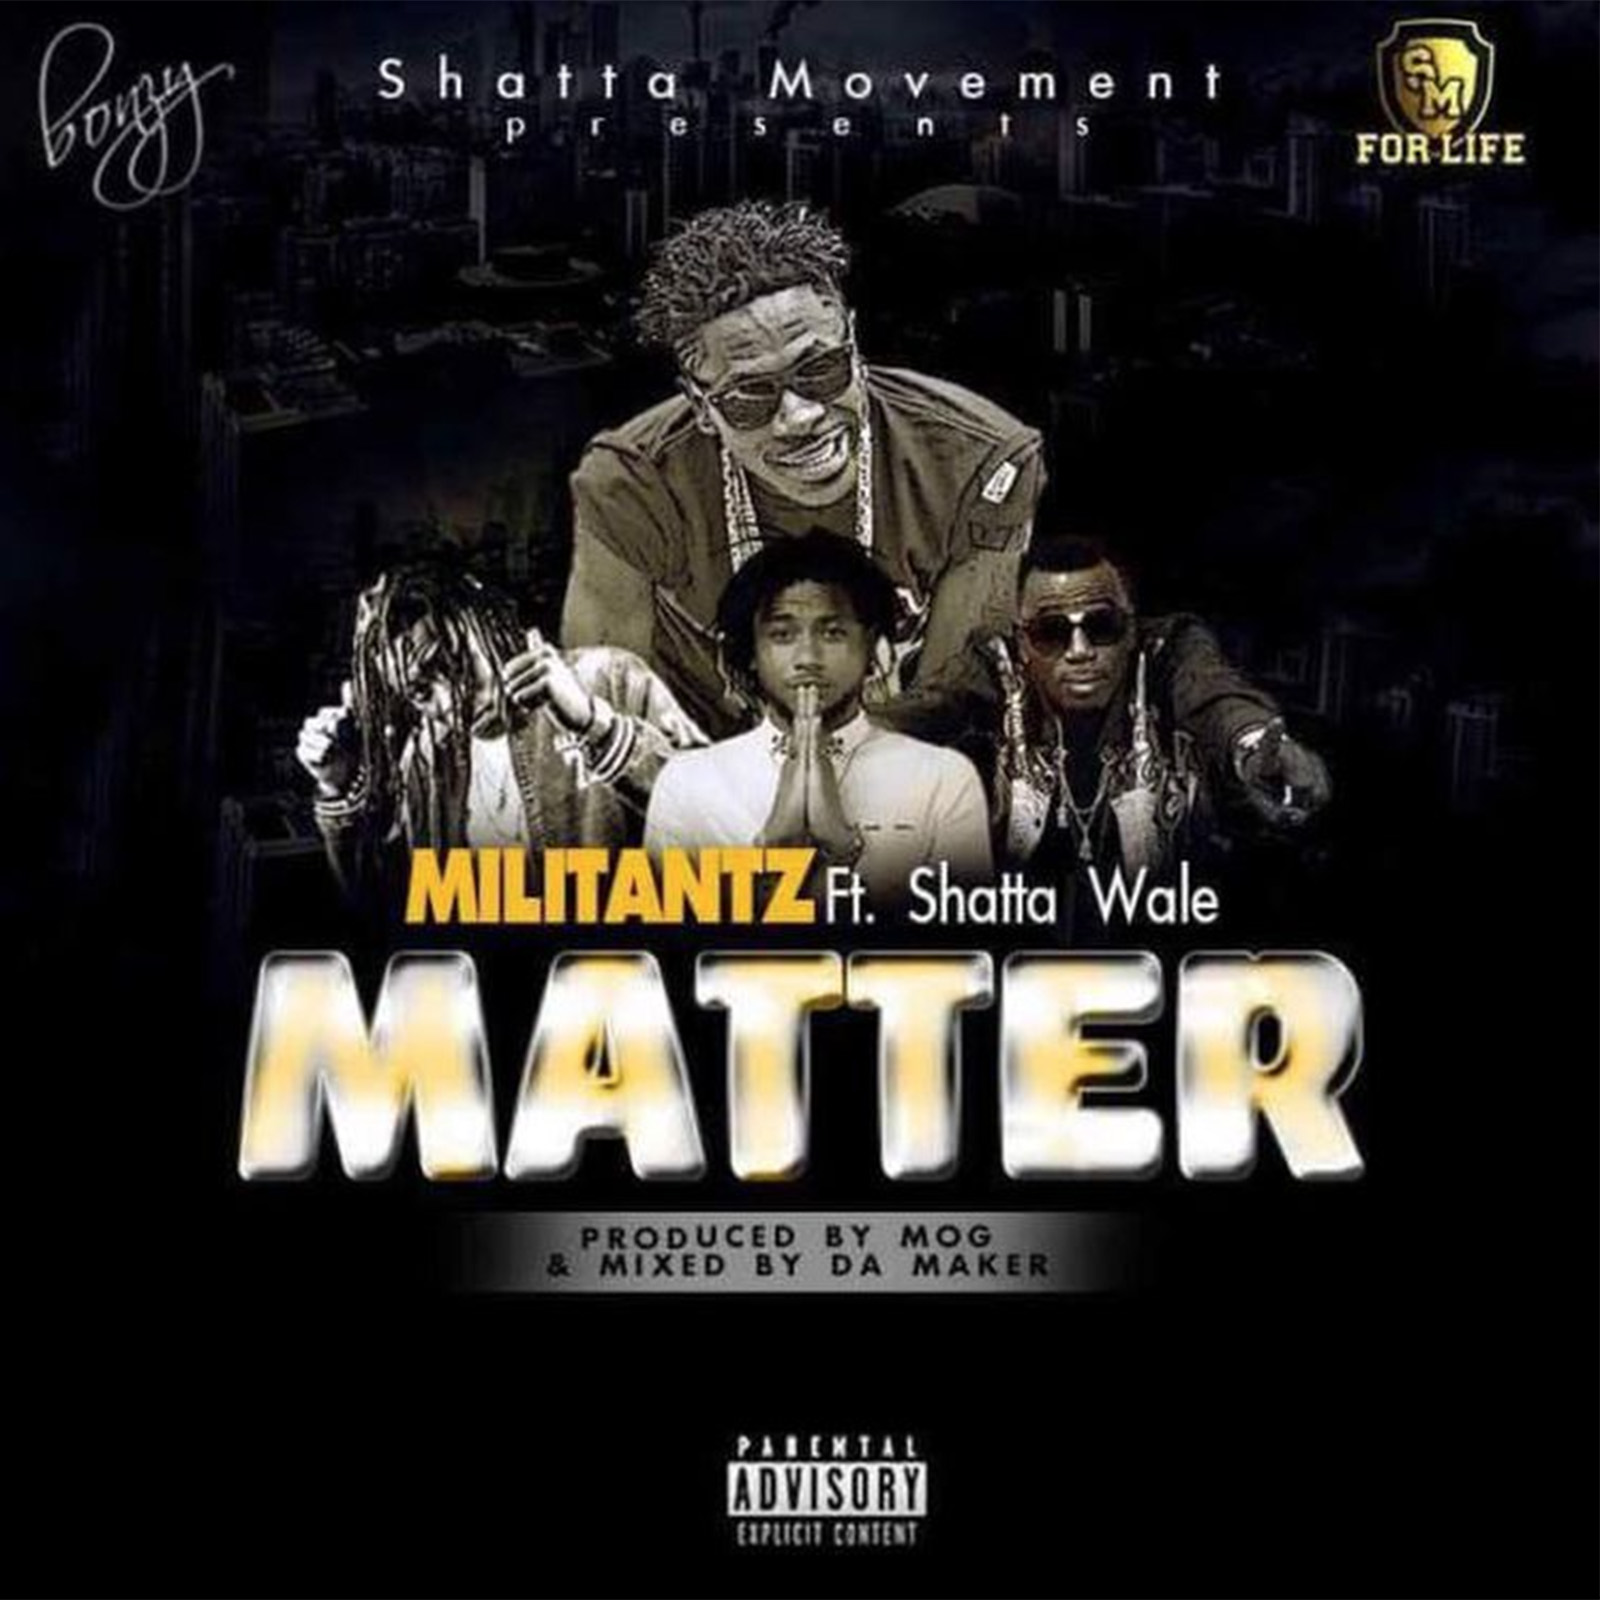 My Matter by Militantz feat. Shatta Wale